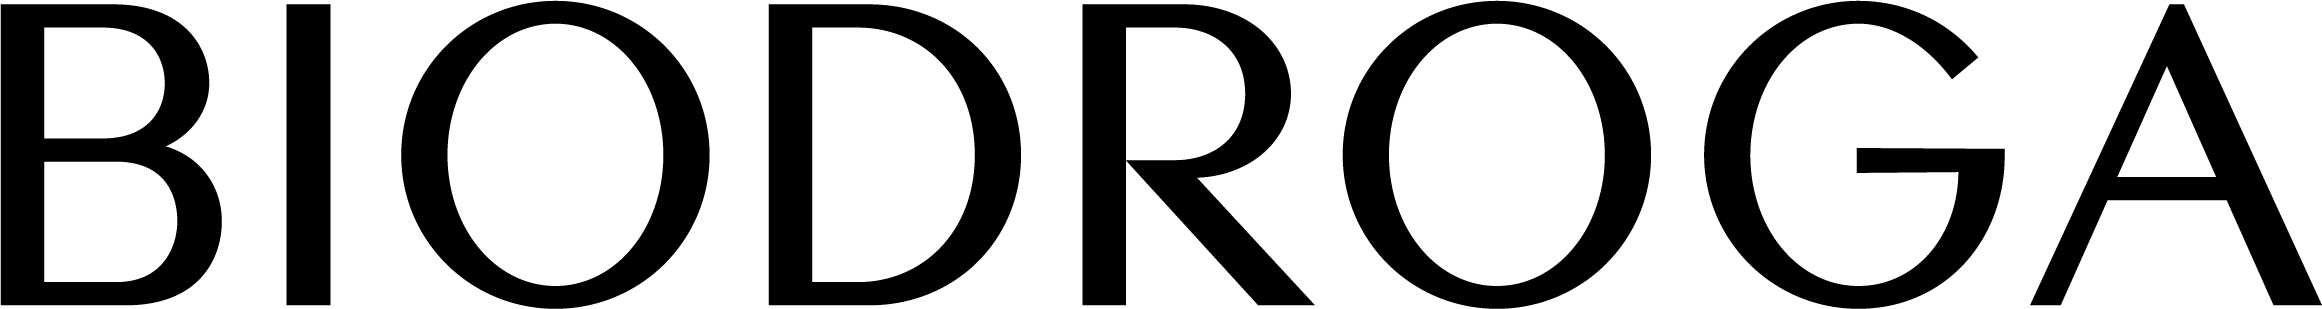 Biodroga MD logo